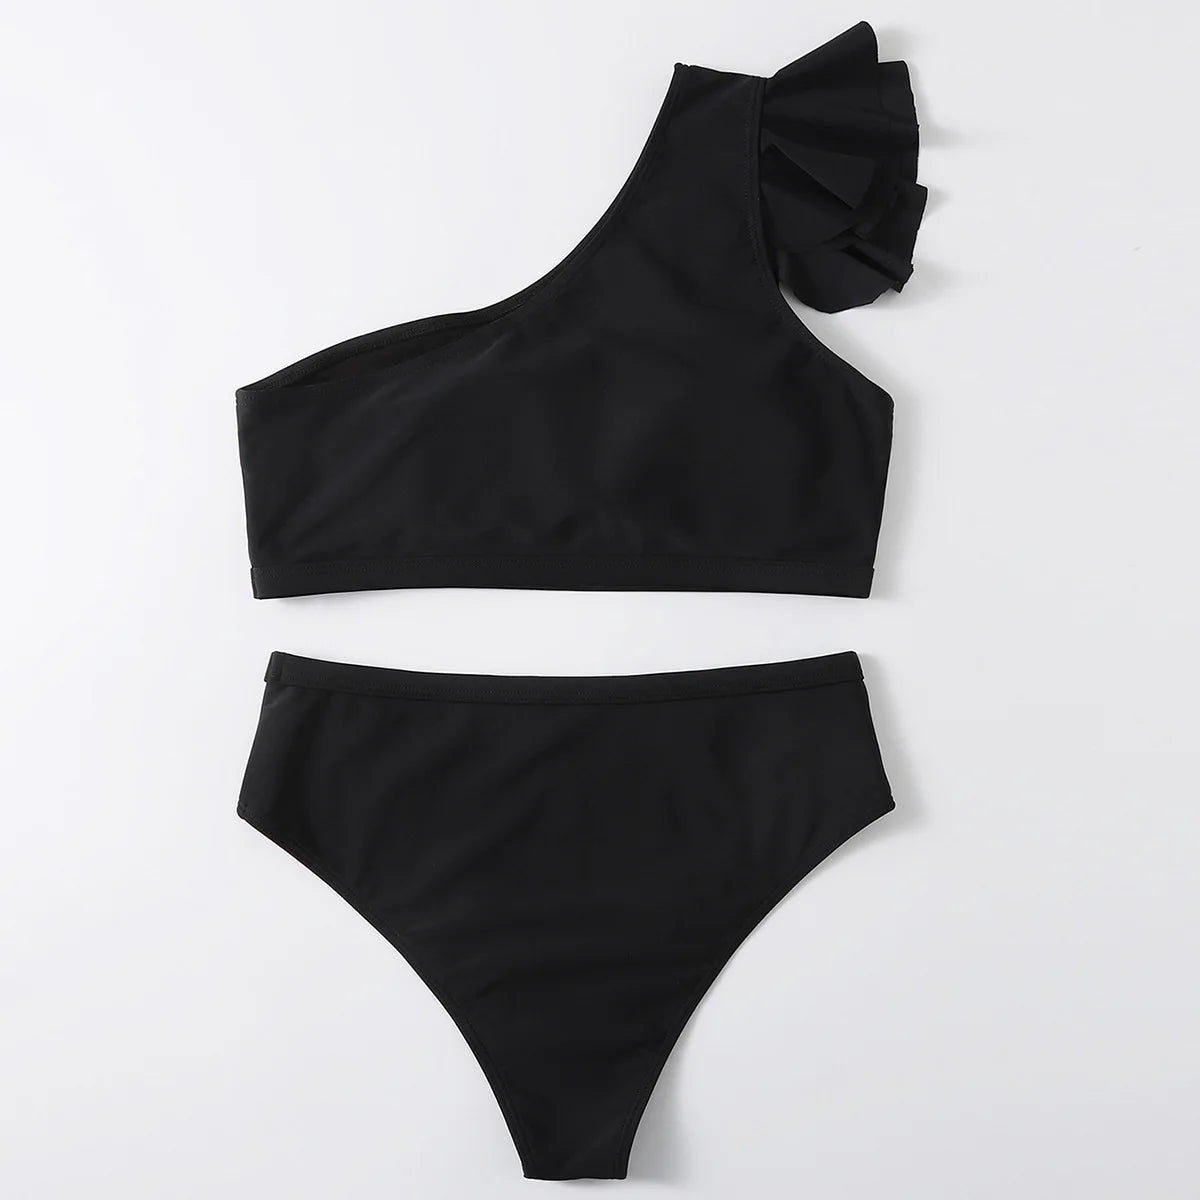 One Shoulder Bikinis Women Ruffle Swimsuit Solid High Waist Swimwear Padded Bathing Swimming Suit Beachwear